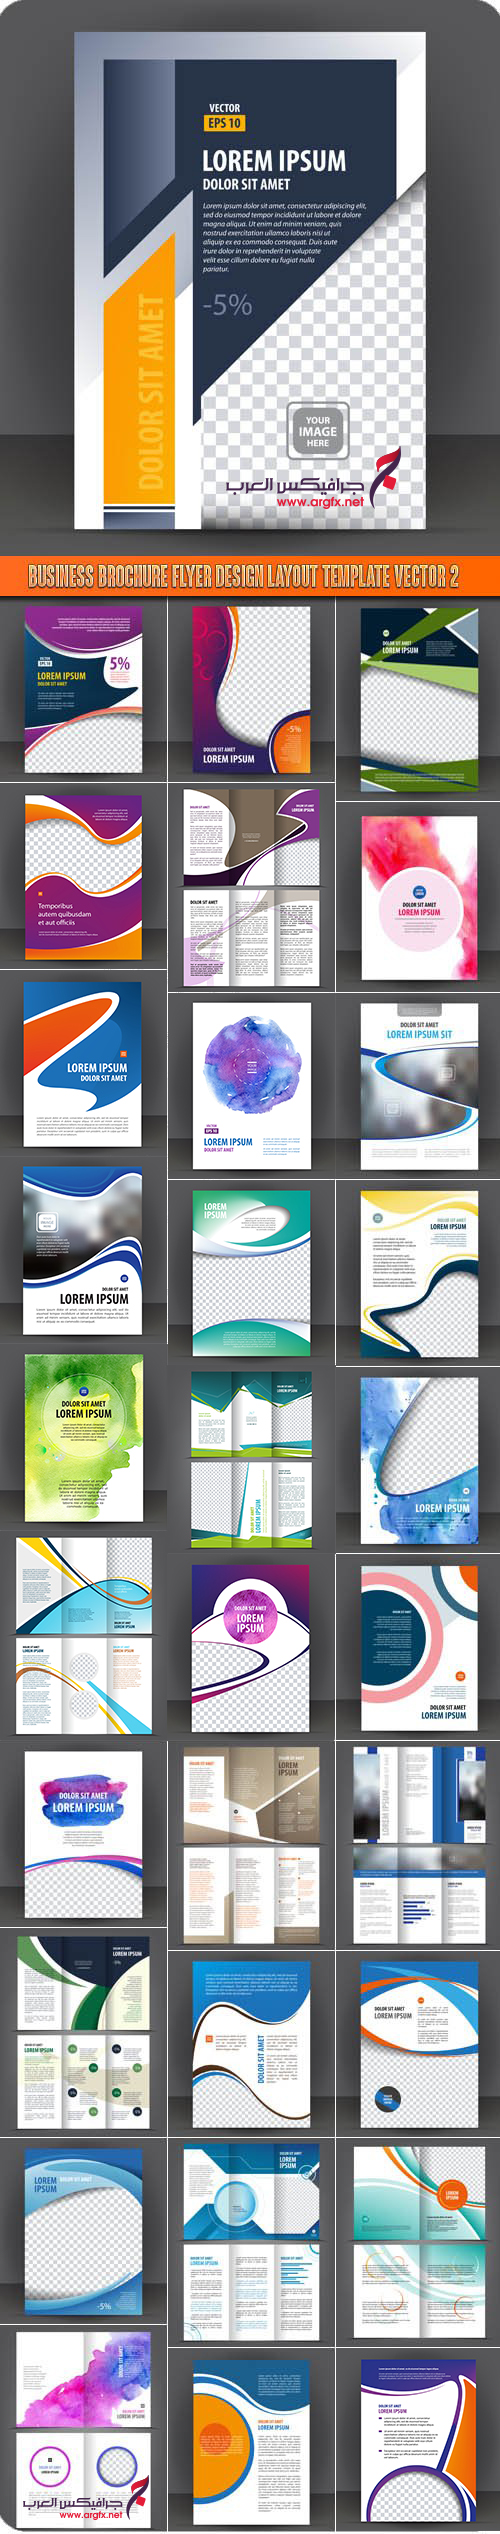 Business brochure flyer design layout template vector 2